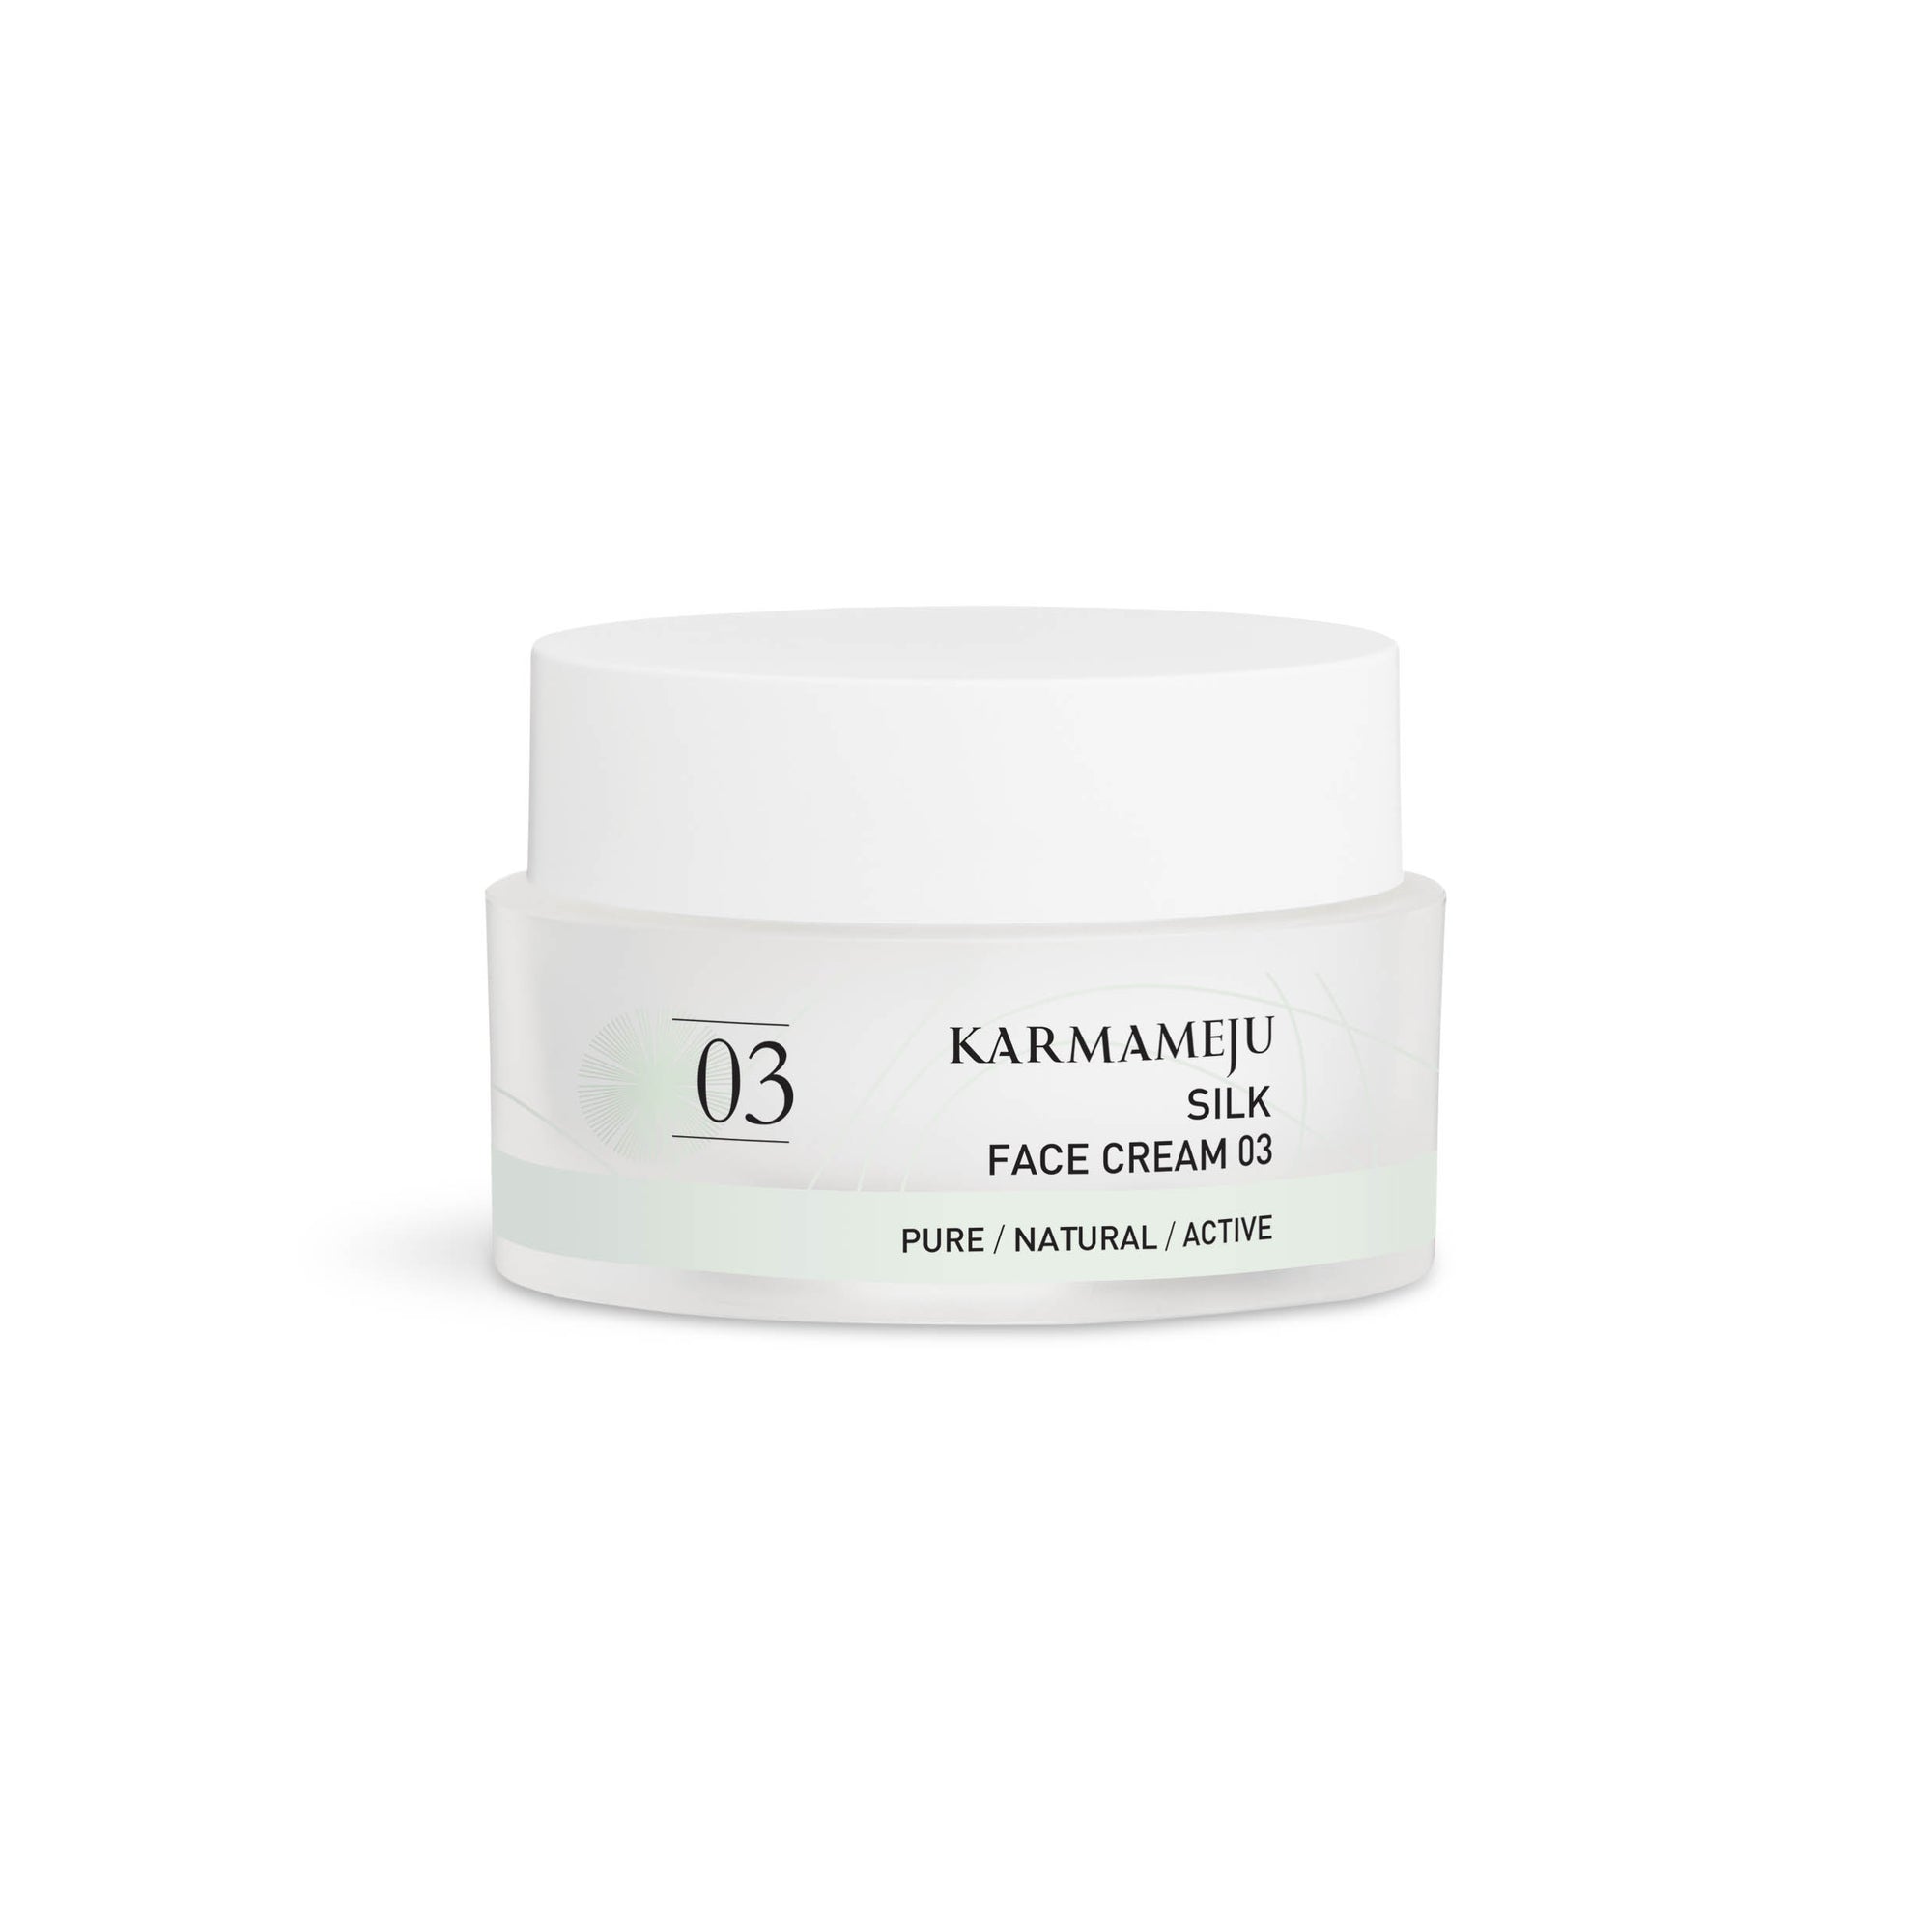 Karmameju - Silk Face Cream 03 50ml - Es Webshop